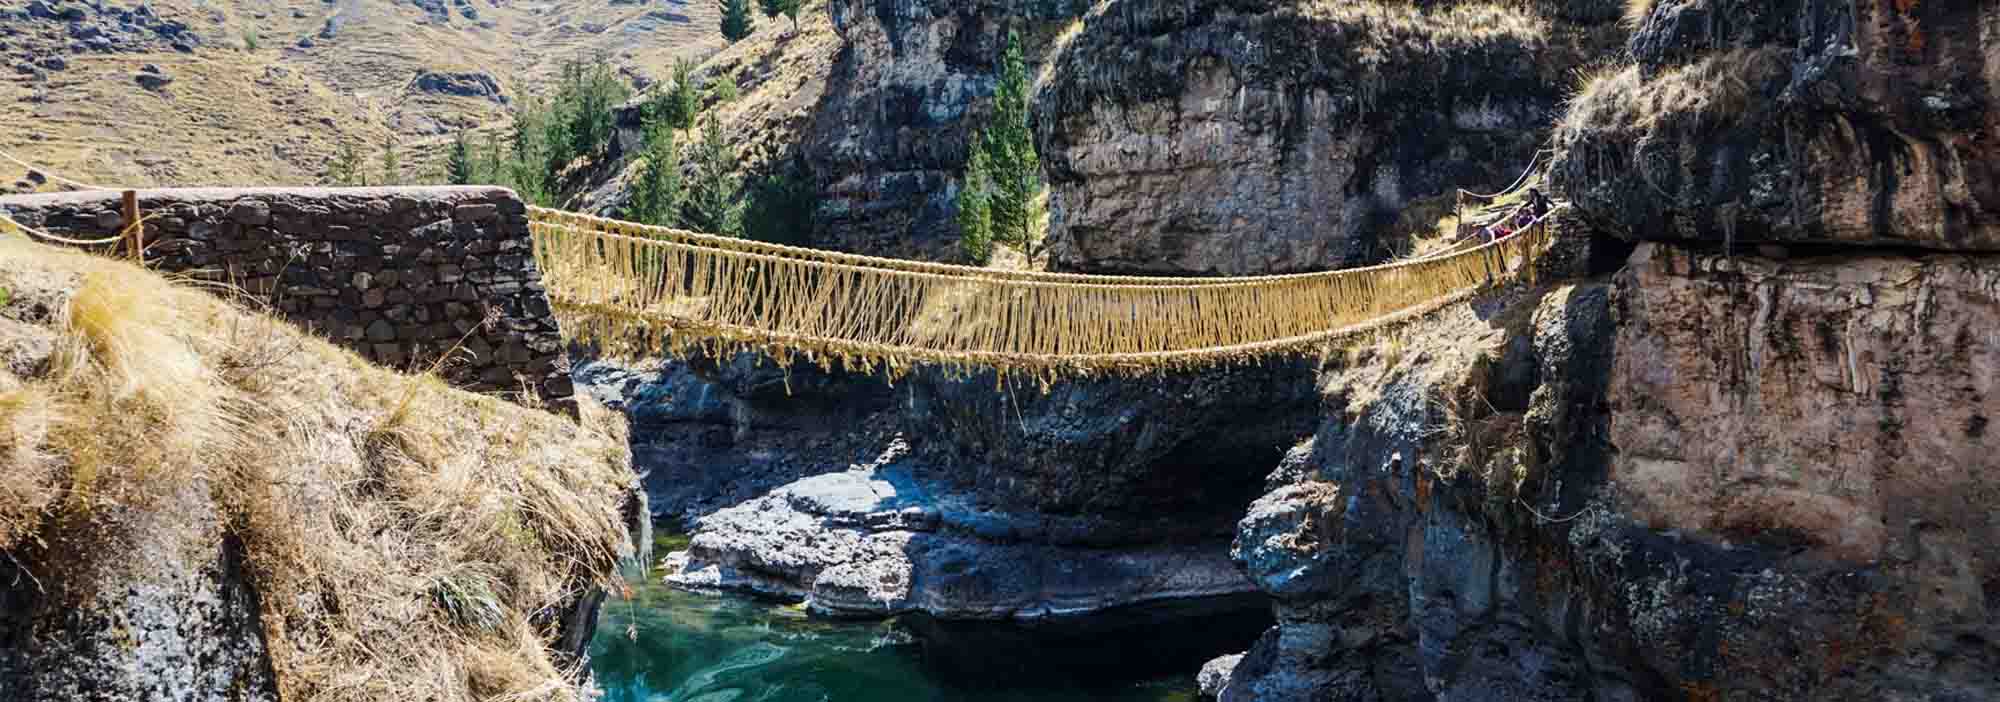  Peru | Peru's Incan Rope Bridges On The Thread of Dissapearing